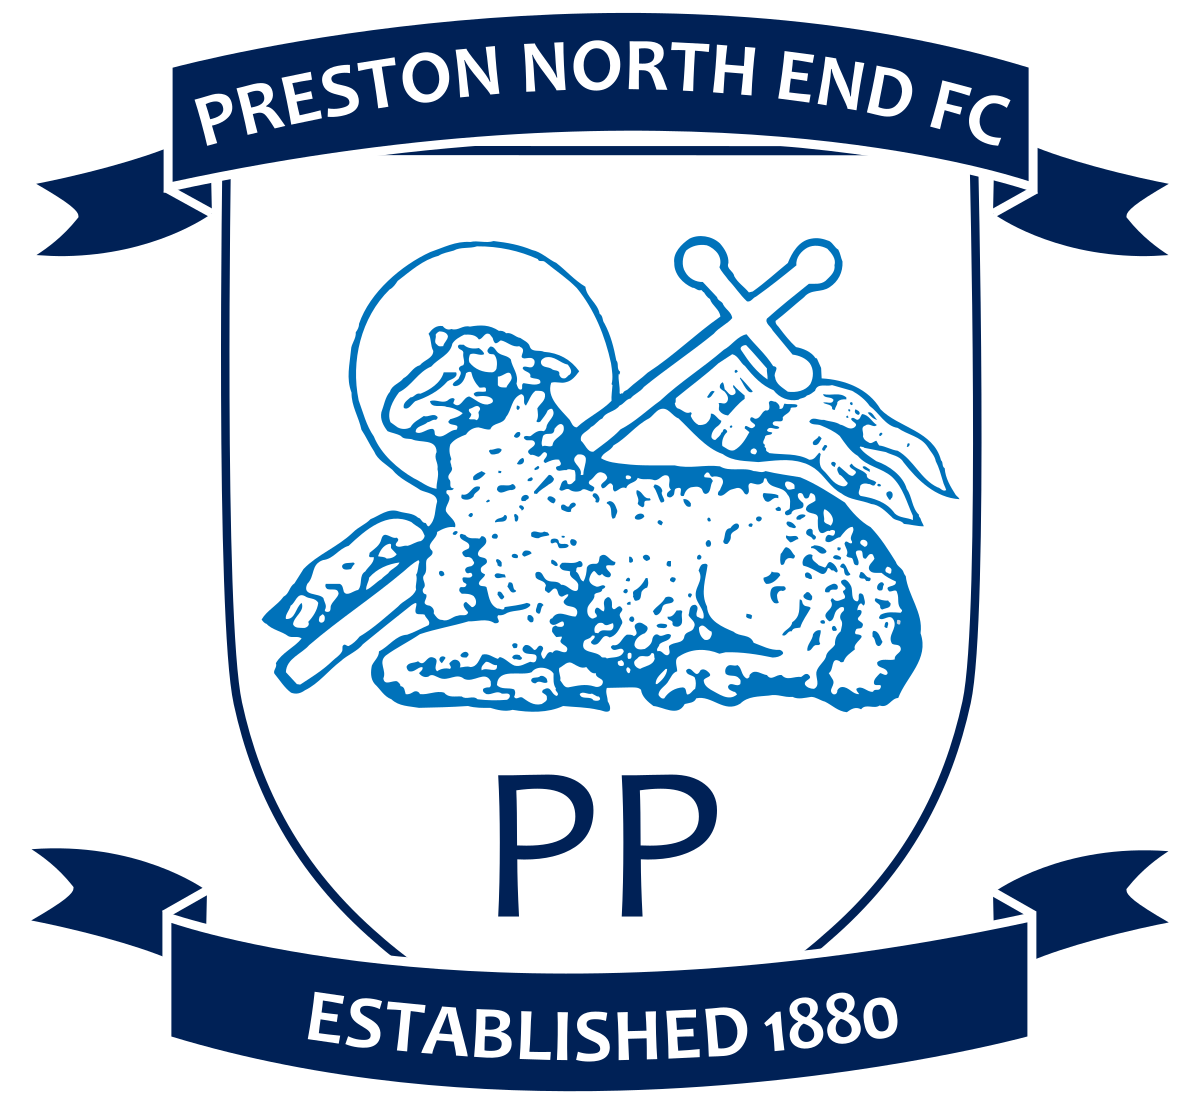 Places Preston North End